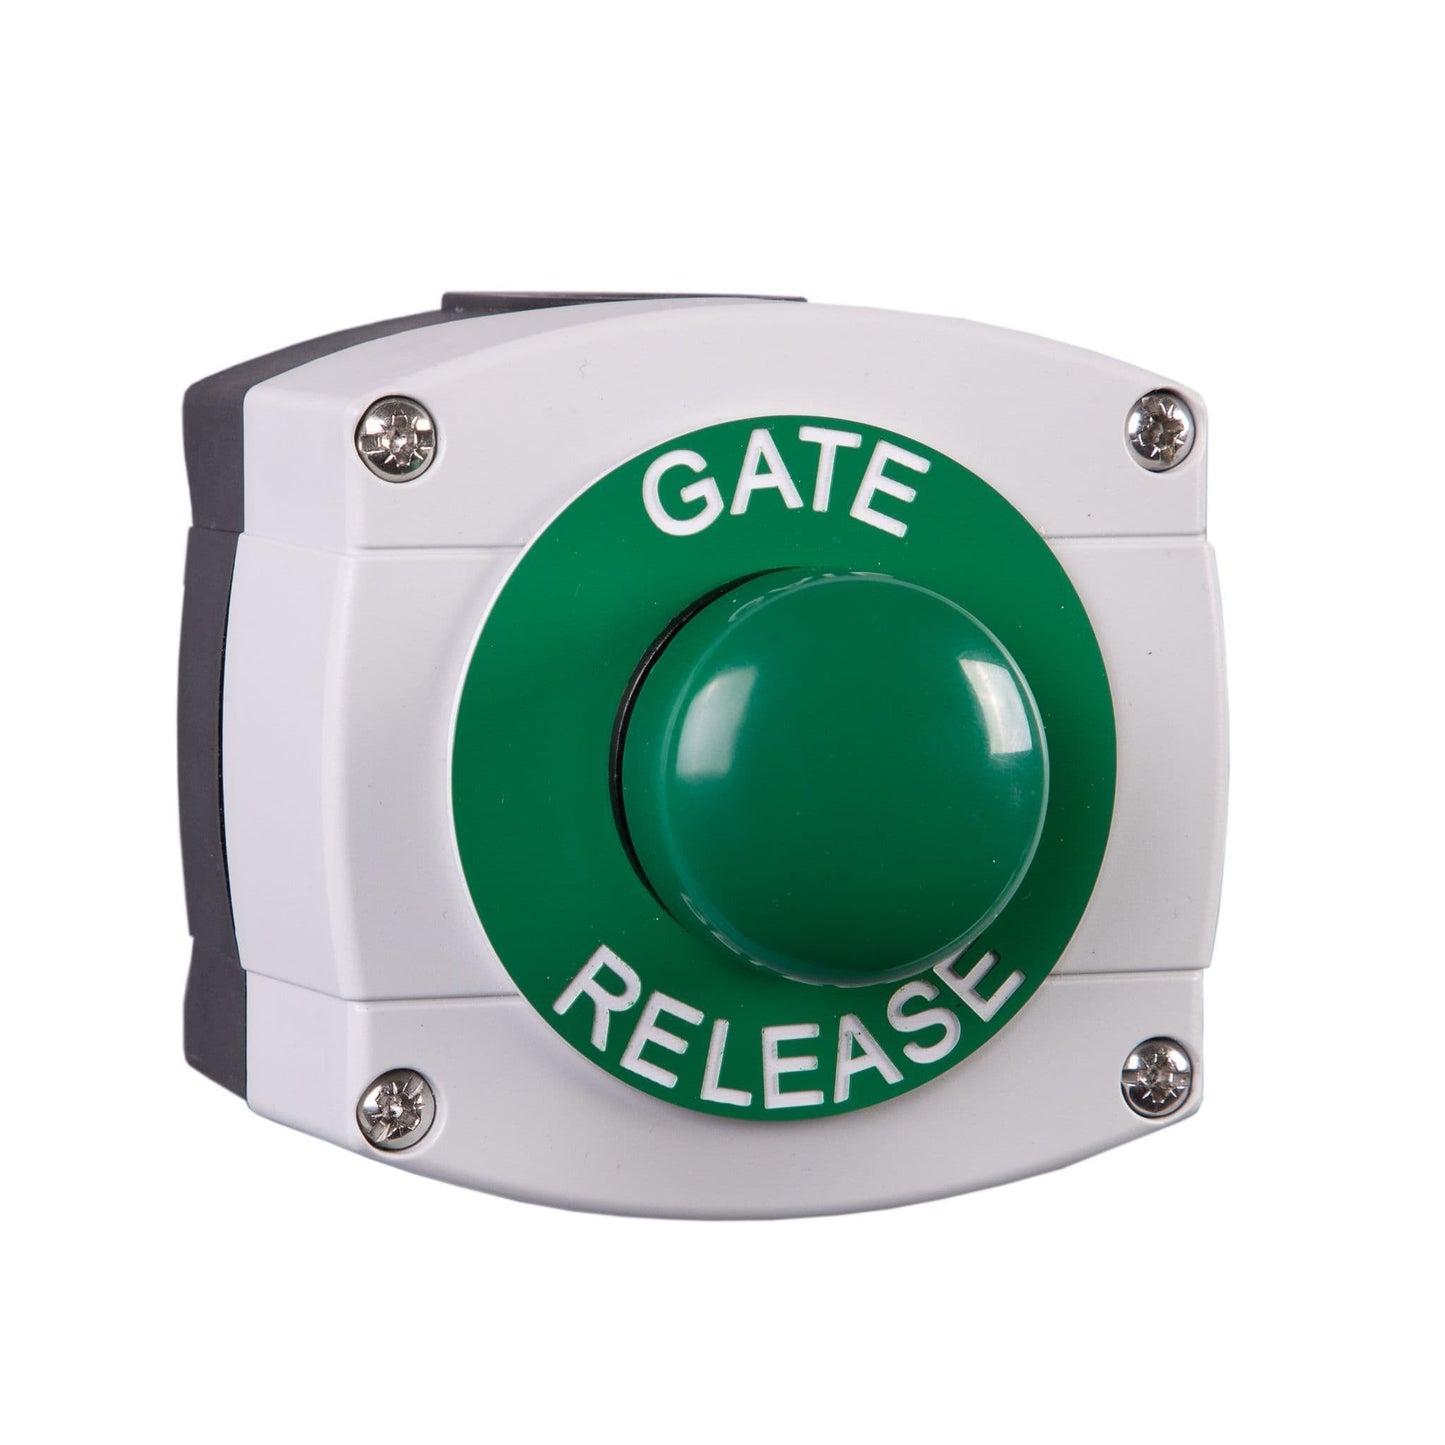 SAP2295 Push Button "Gate Release" External Use